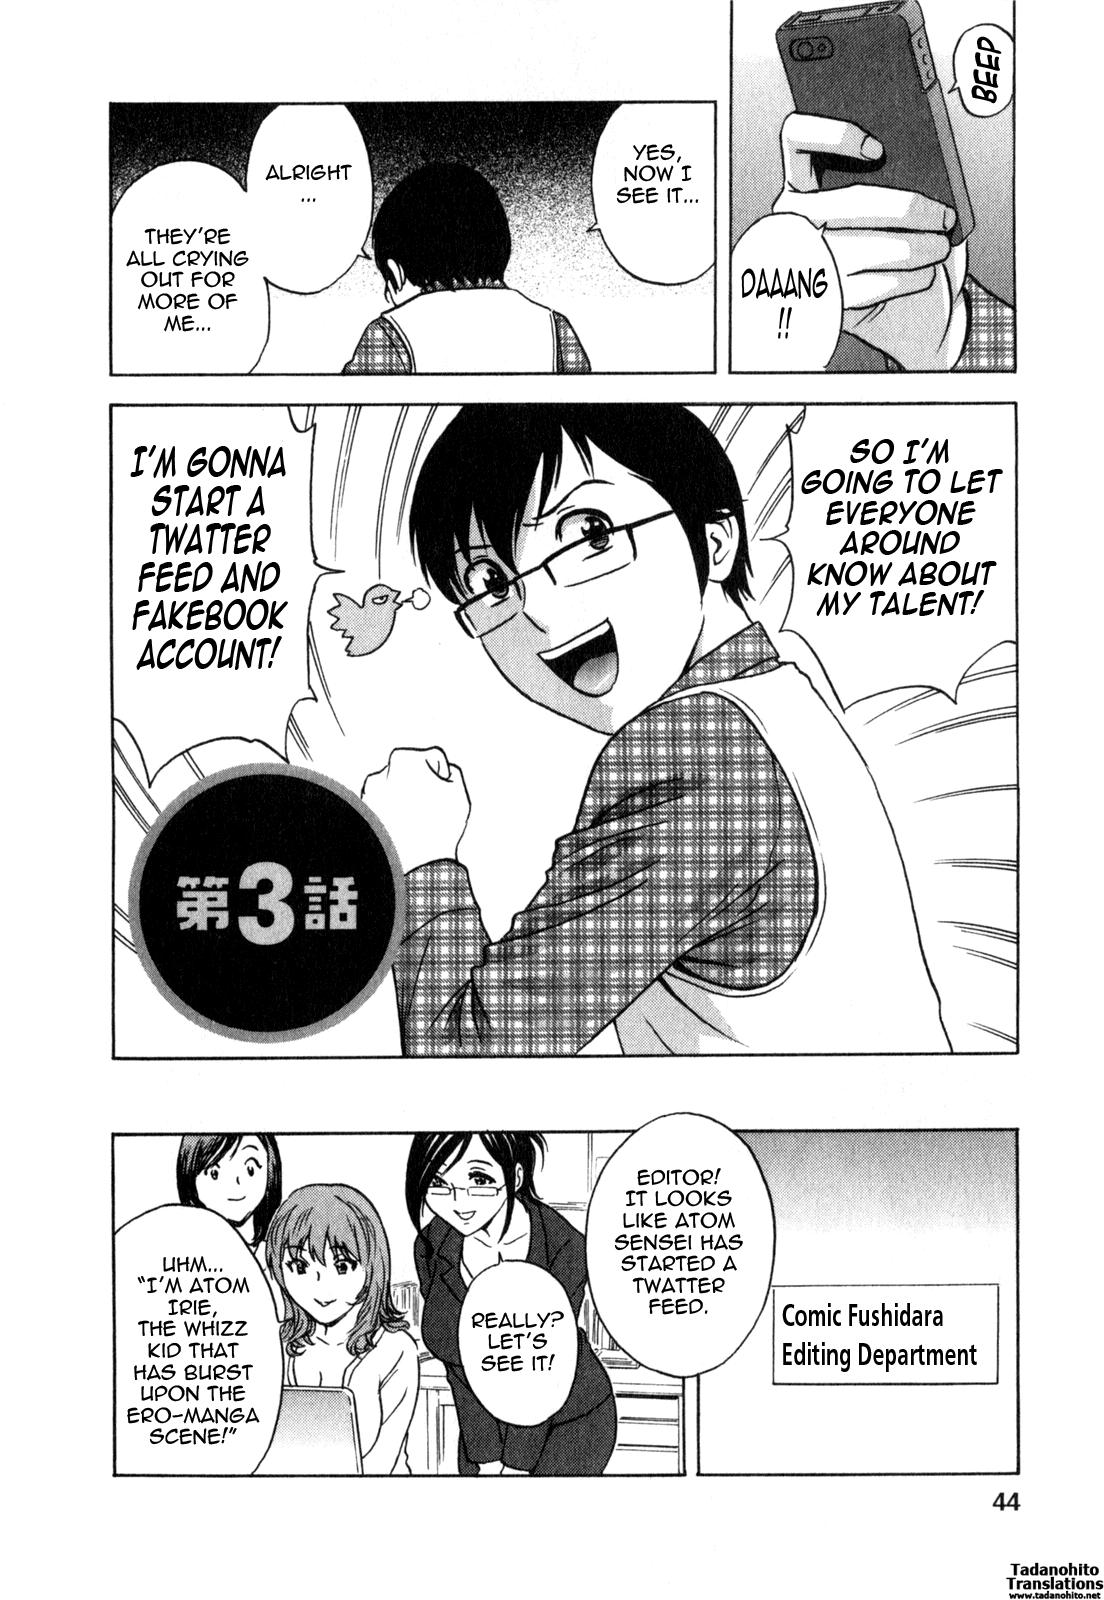 [Hidemaru] Life with Married Women Just Like a Manga 3 - Ch. 1-8 [English] {Tadanohito} 47